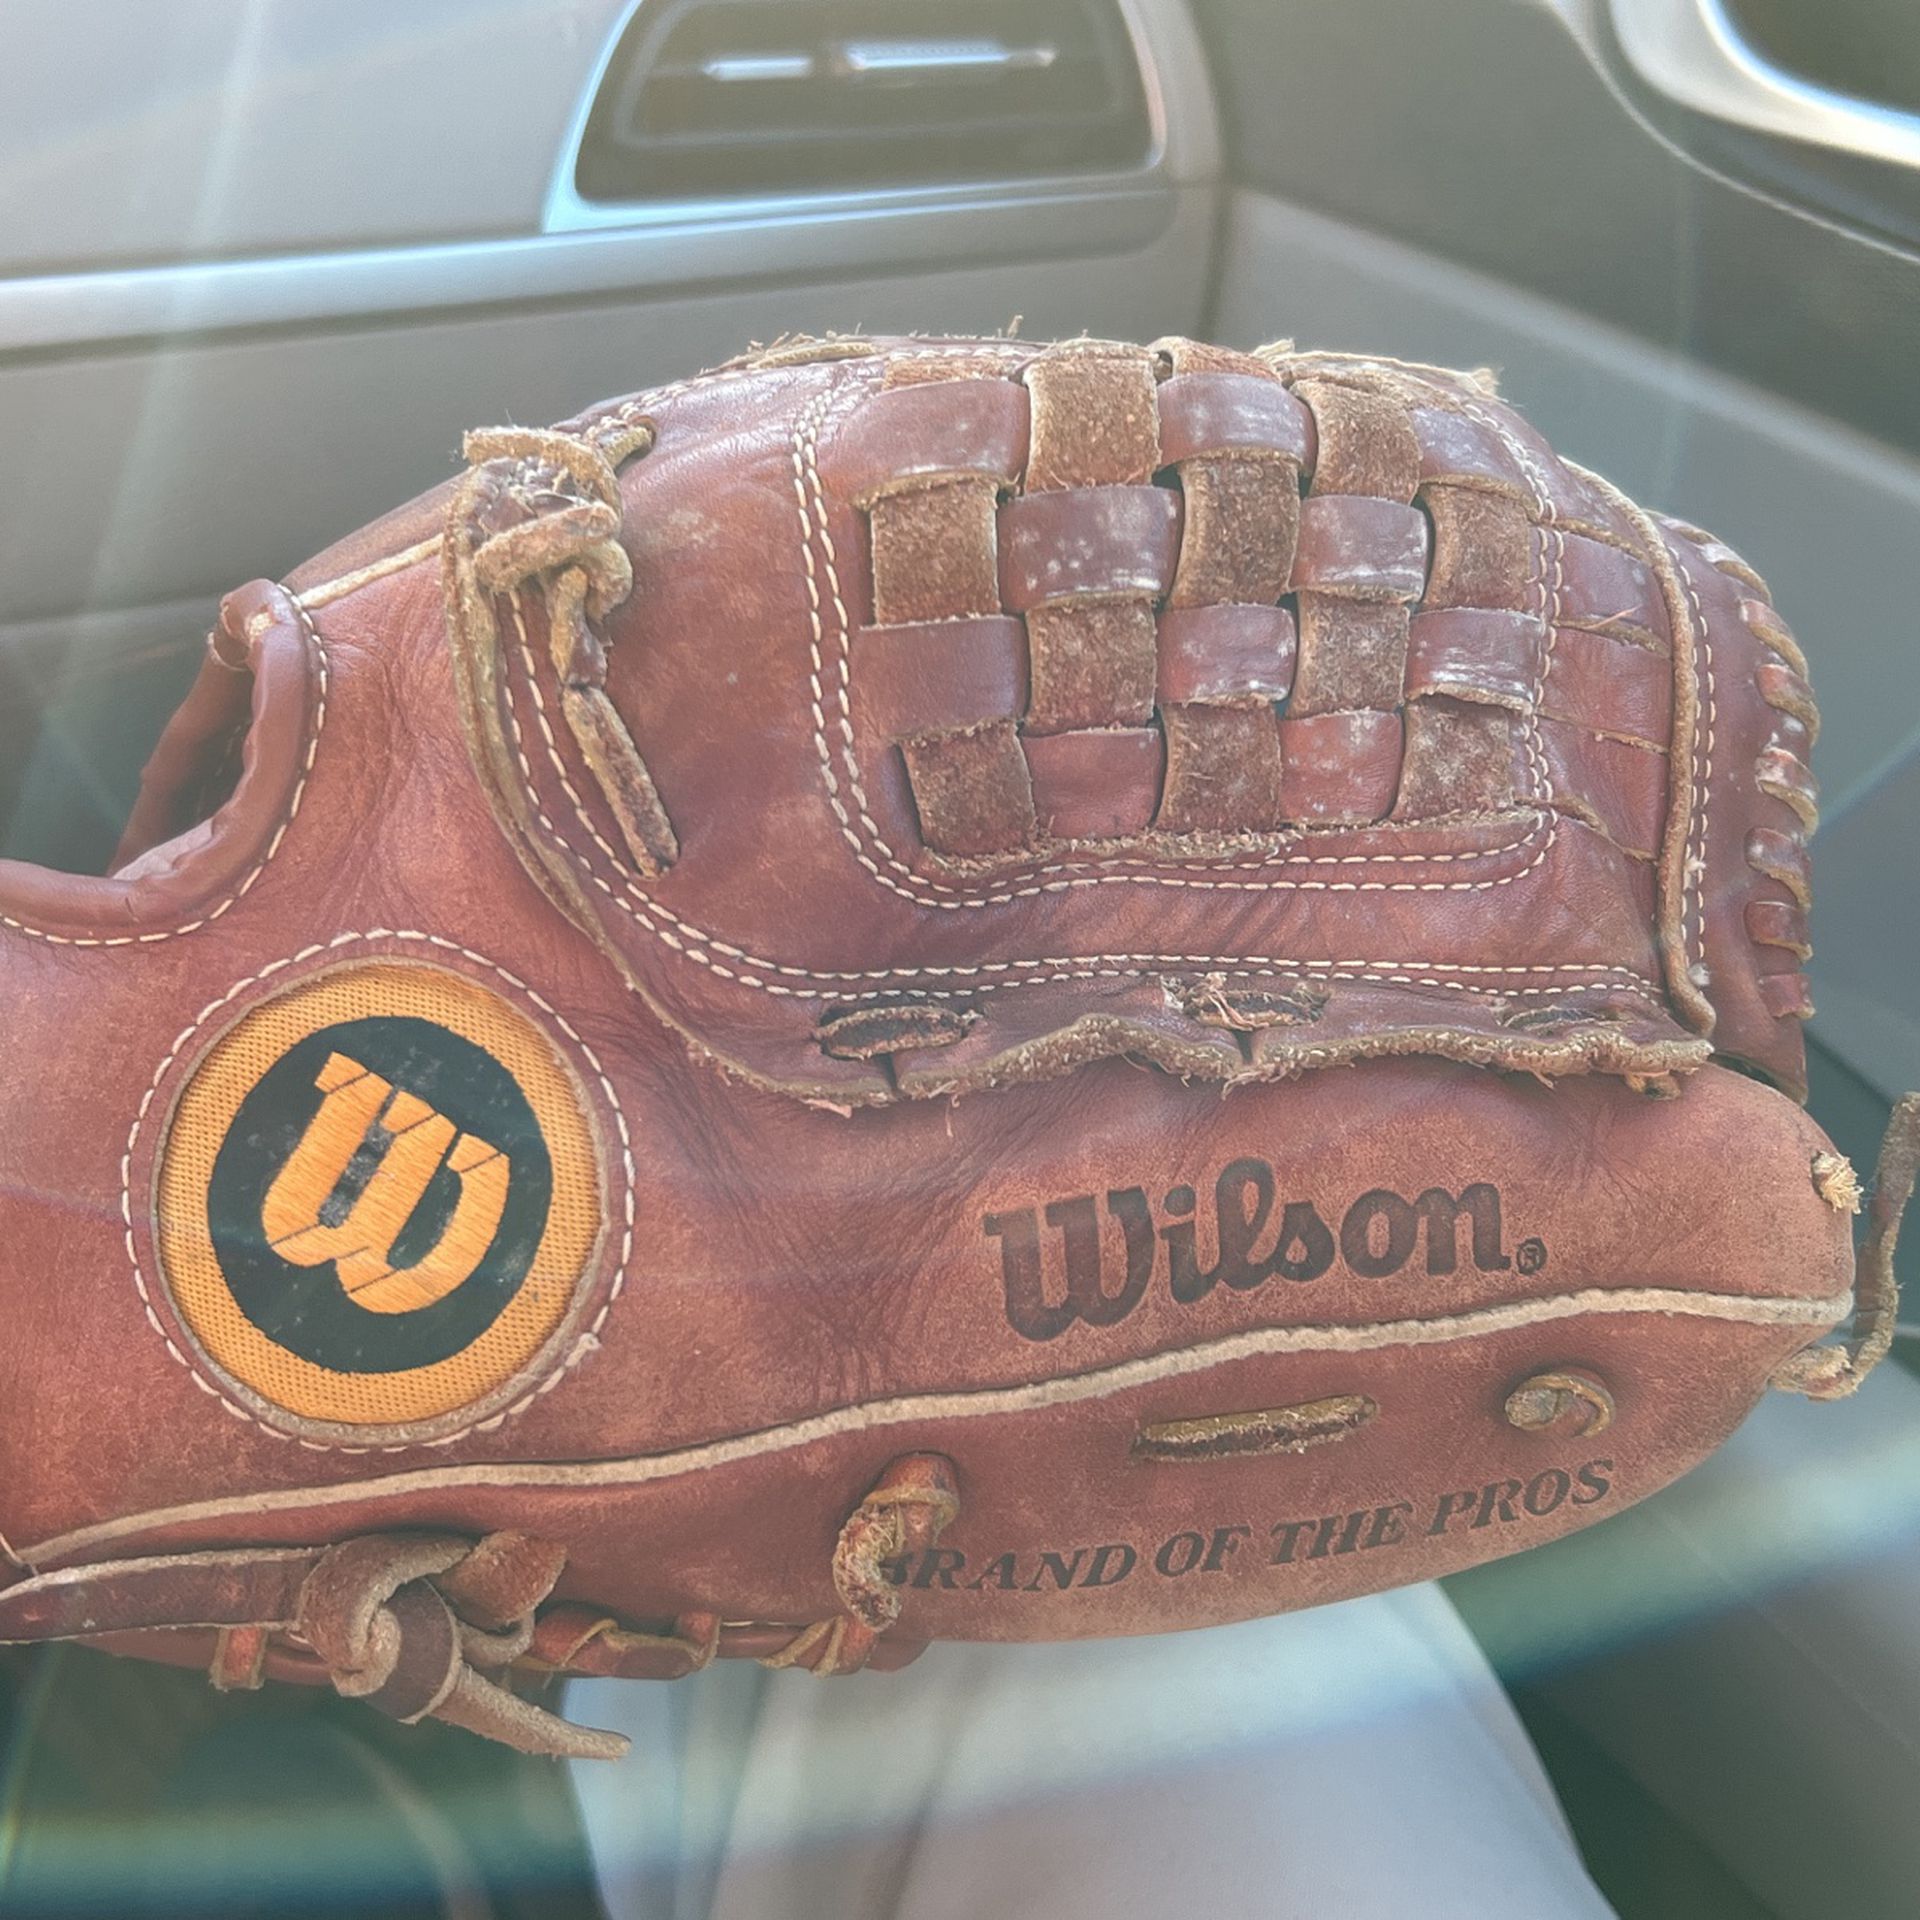 Wilson field master baseball glove